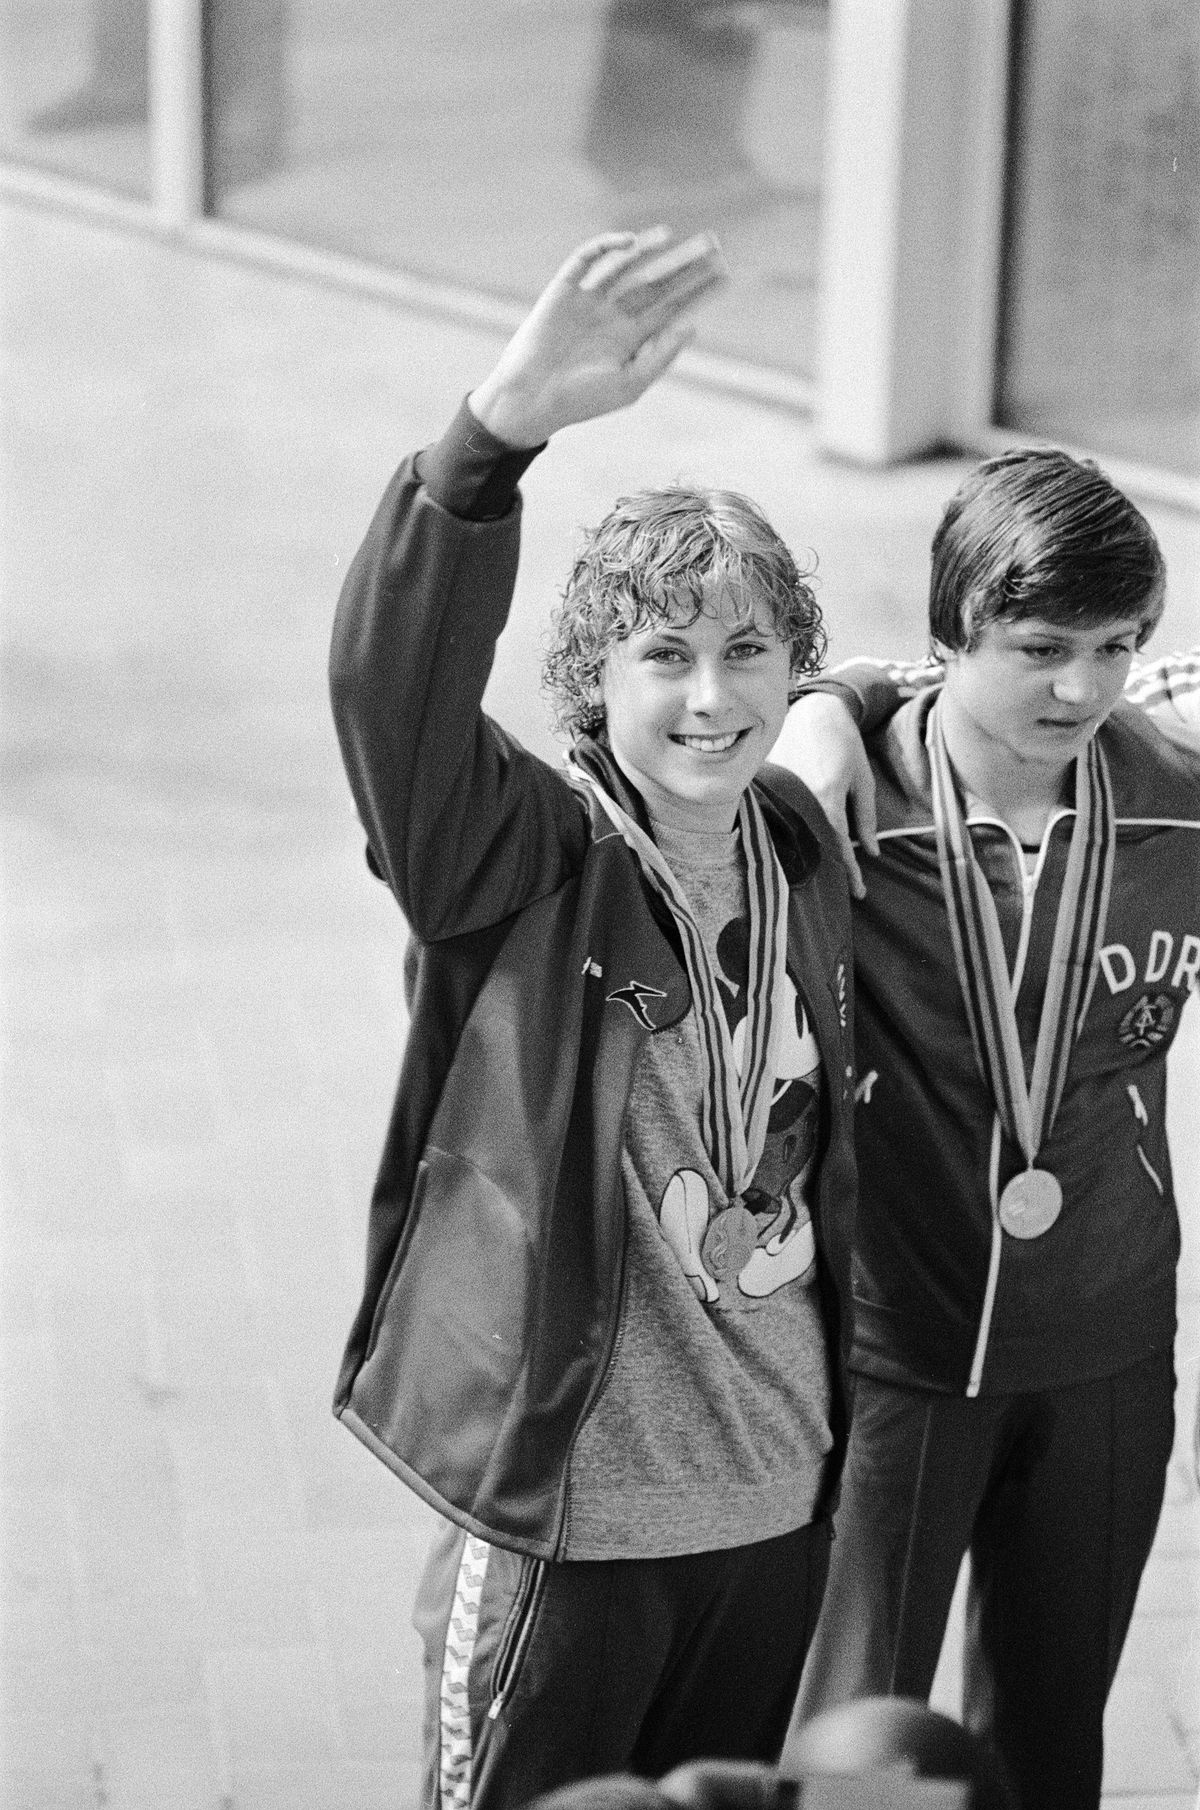 Moscow Olympics 1980